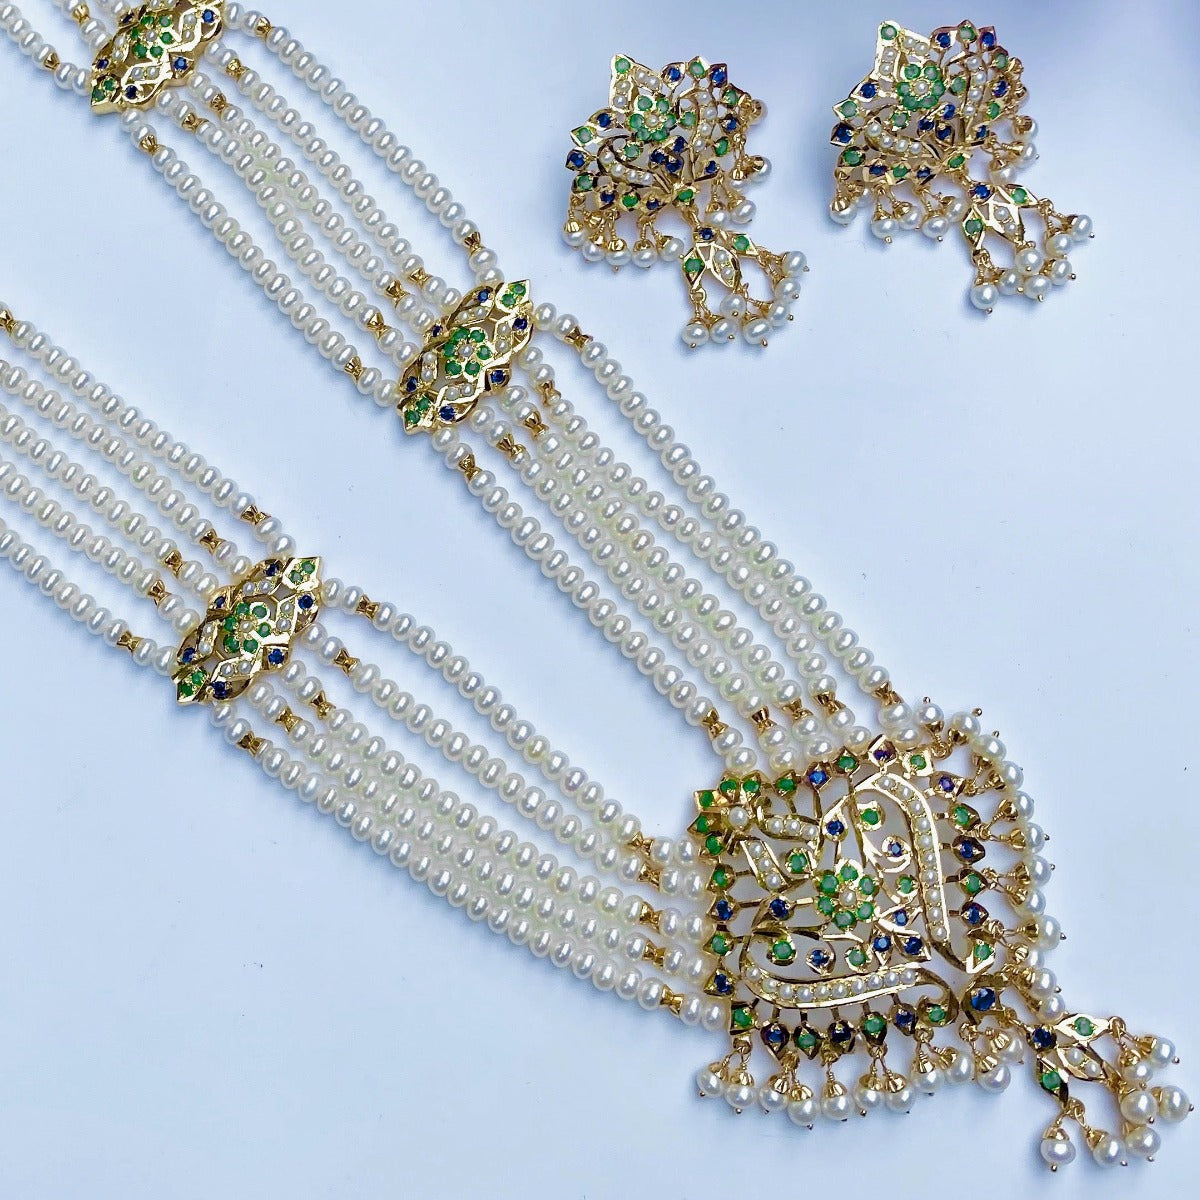 Pearls: Necklaces, Rings, Earrings, Bracelets, Sets